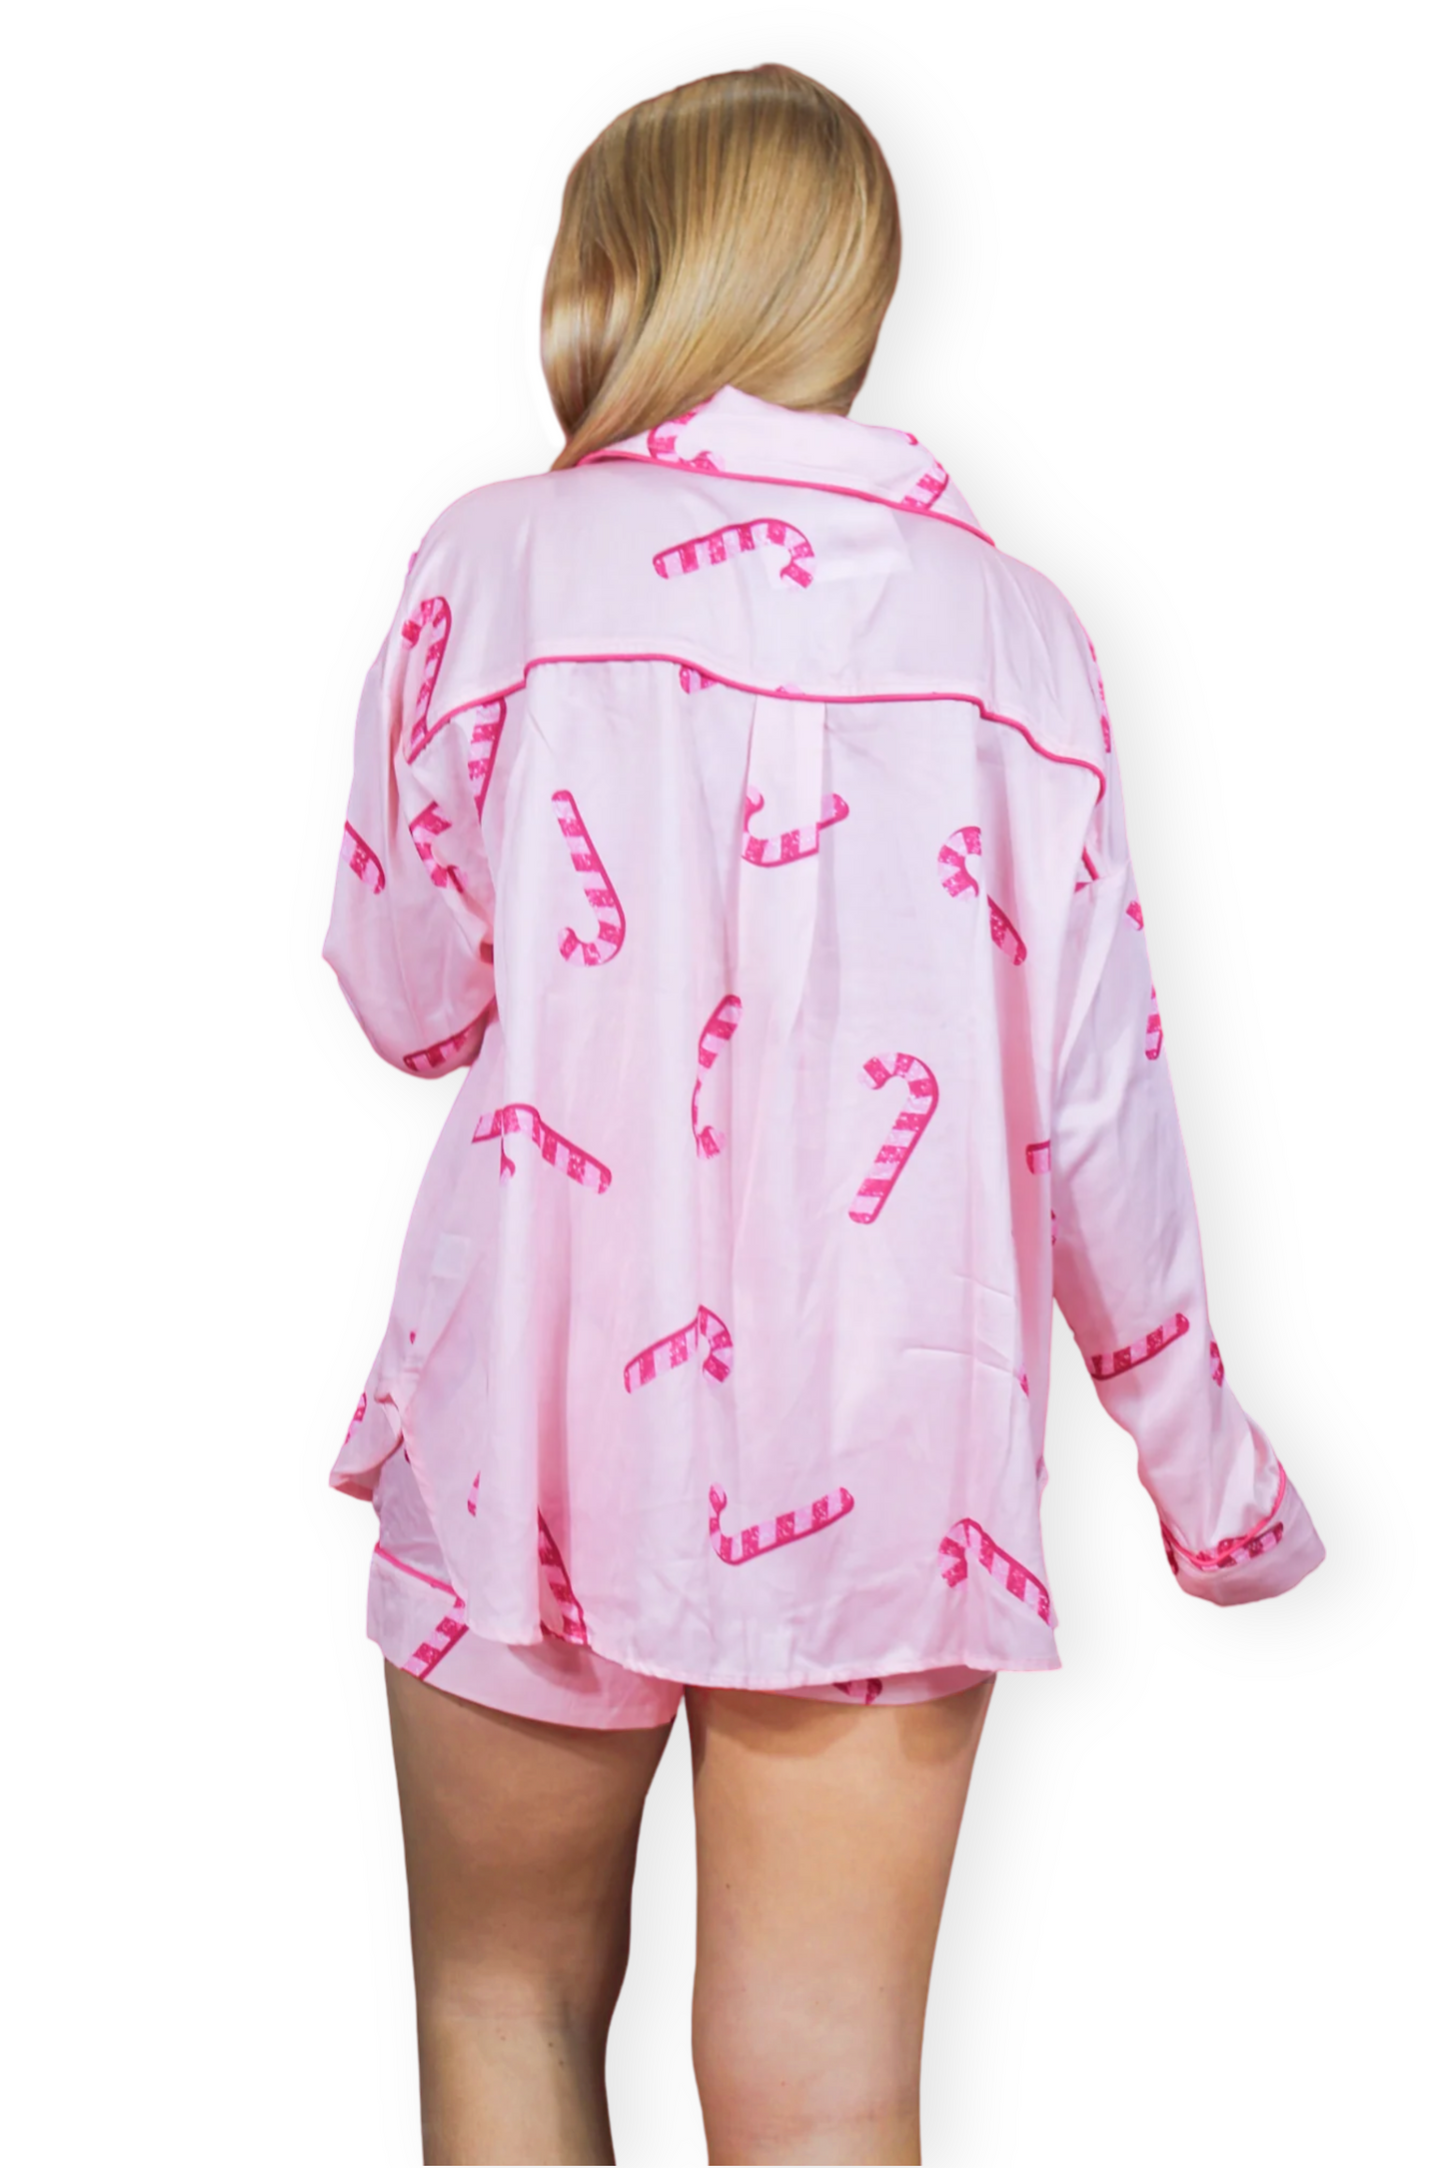 Candy Cane Pajama Set